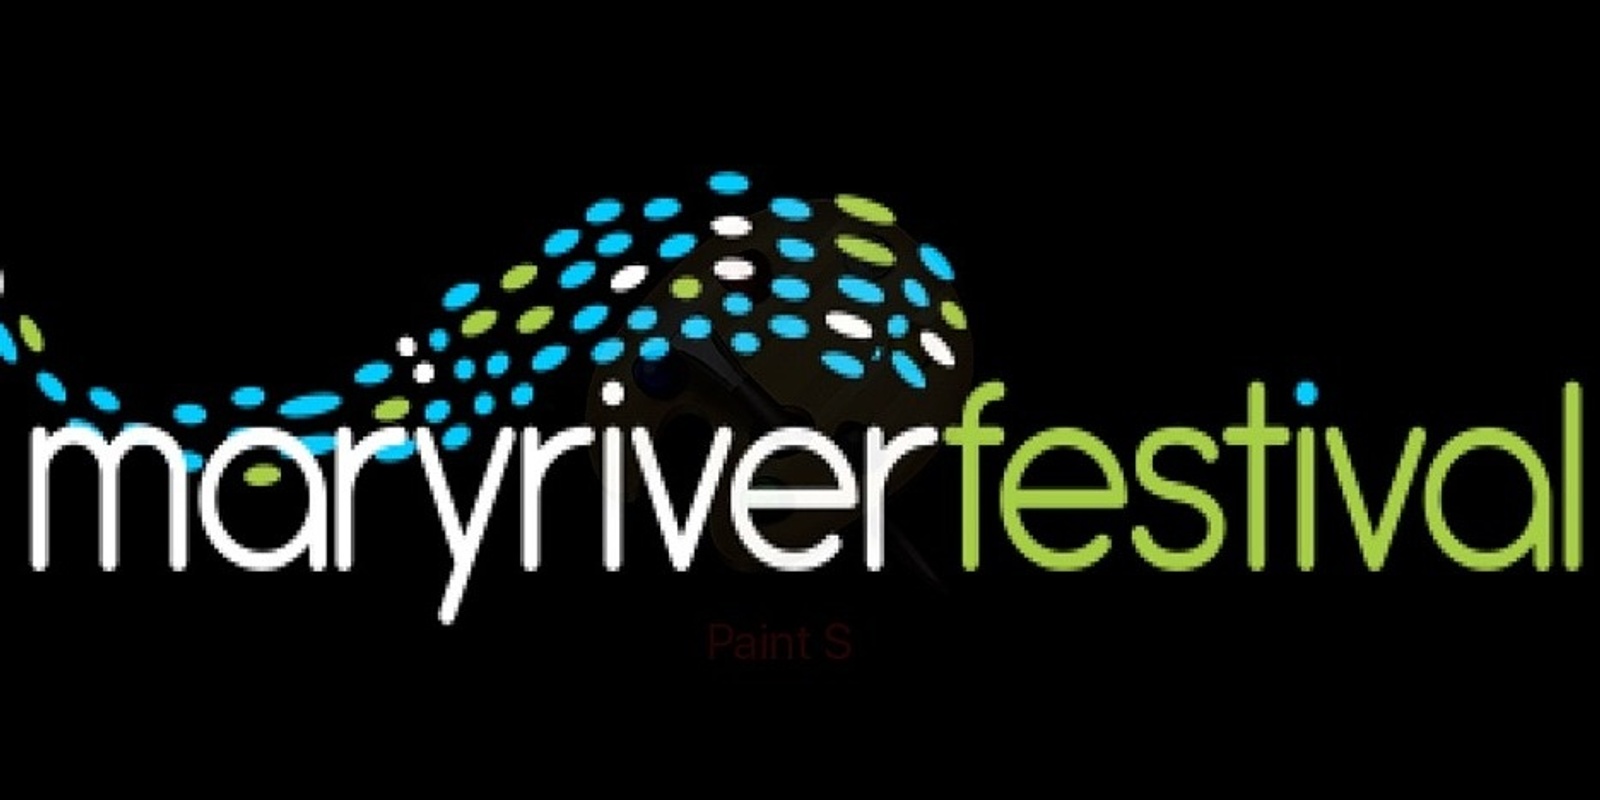 Banner image for Mary River Festival